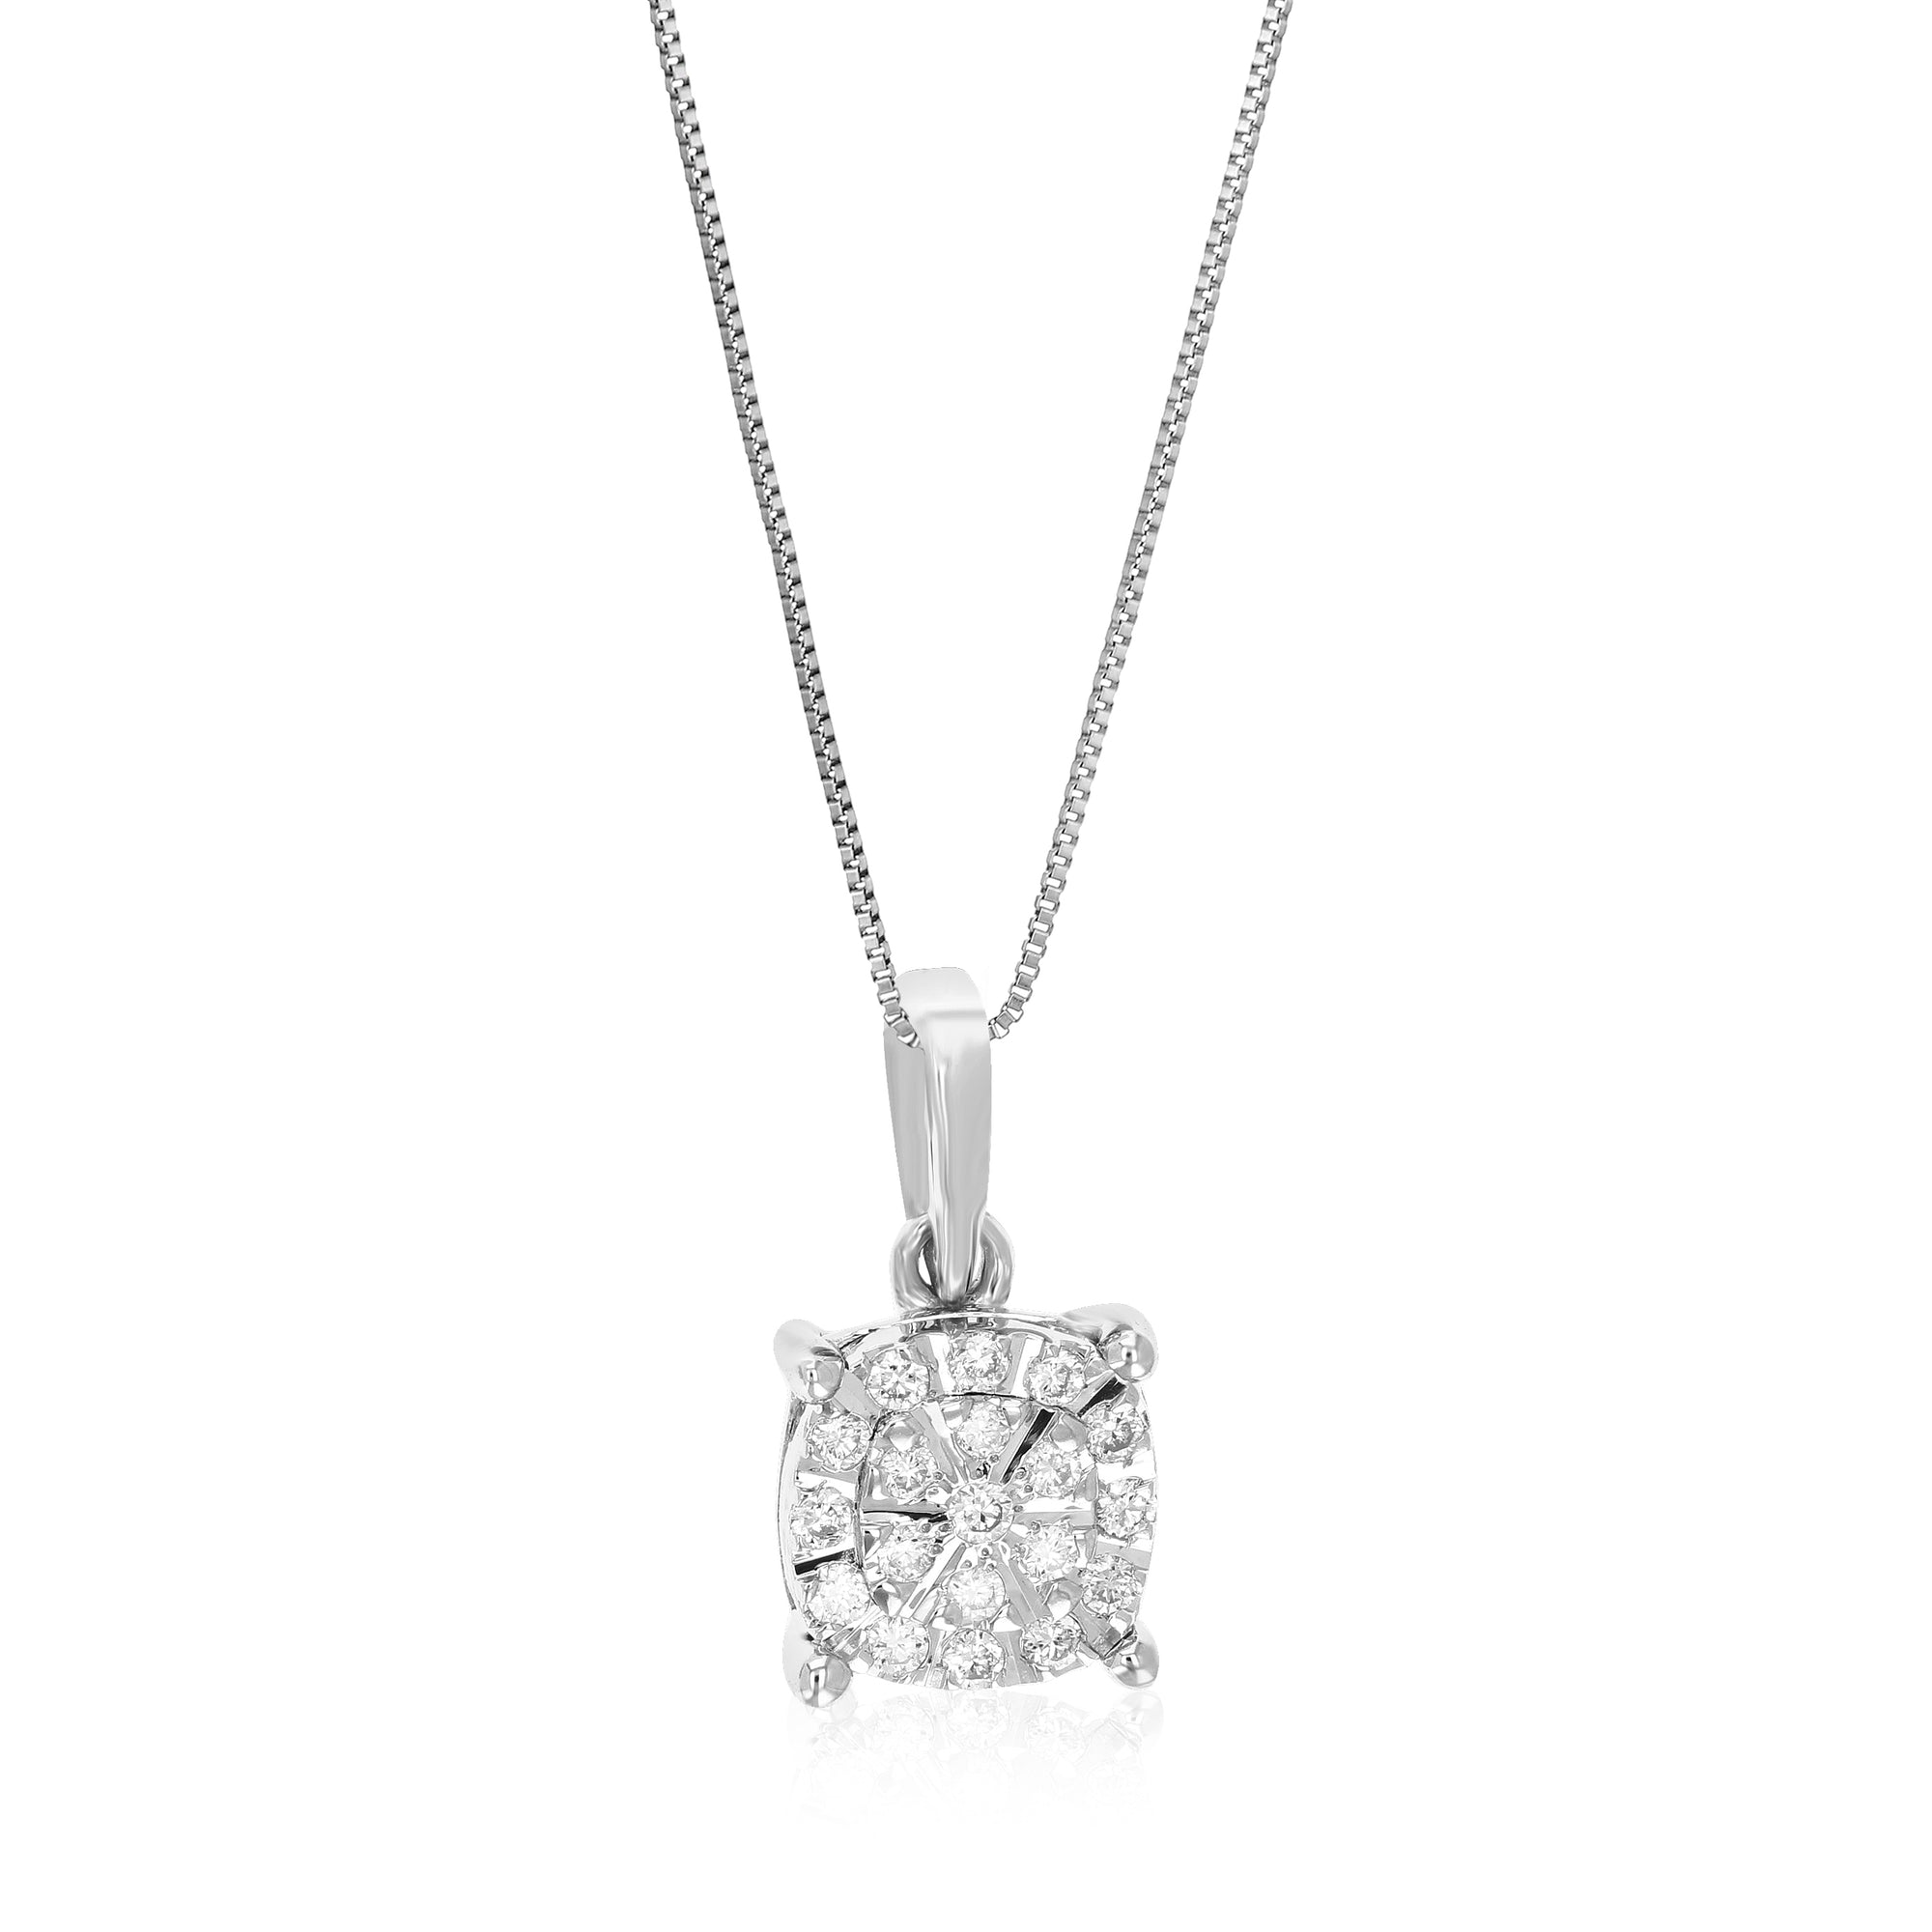 1/10 cttw Diamond Pendant Necklace for Women, Lab Grown Diamond Pendant Necklace in .925 Sterling Silver with Chain, Size 1/2 Inch